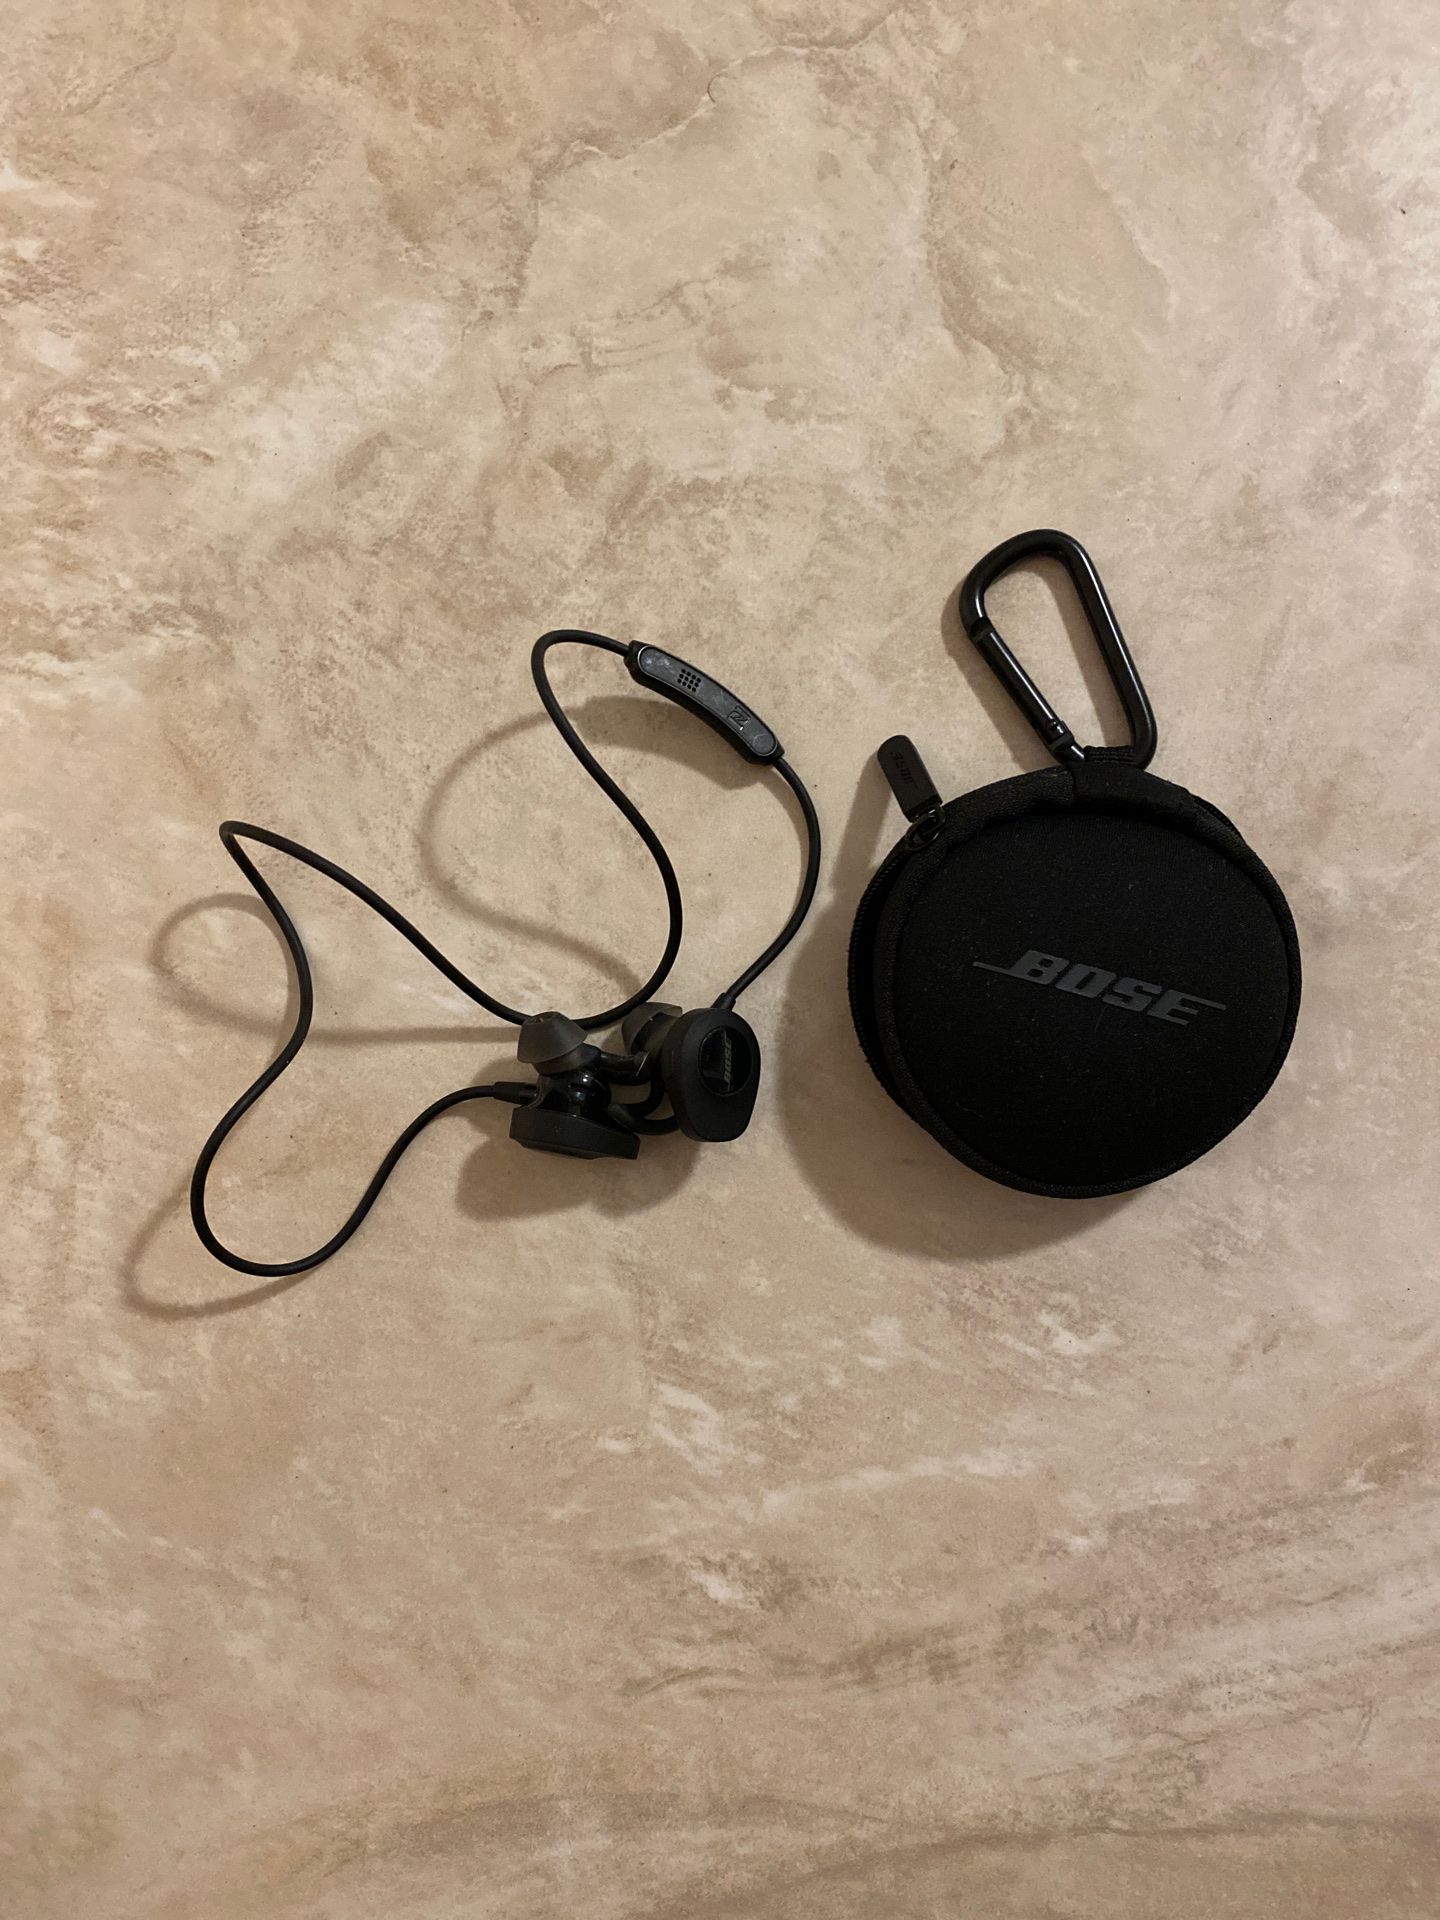 Bose Wireless Headphones Soundsport